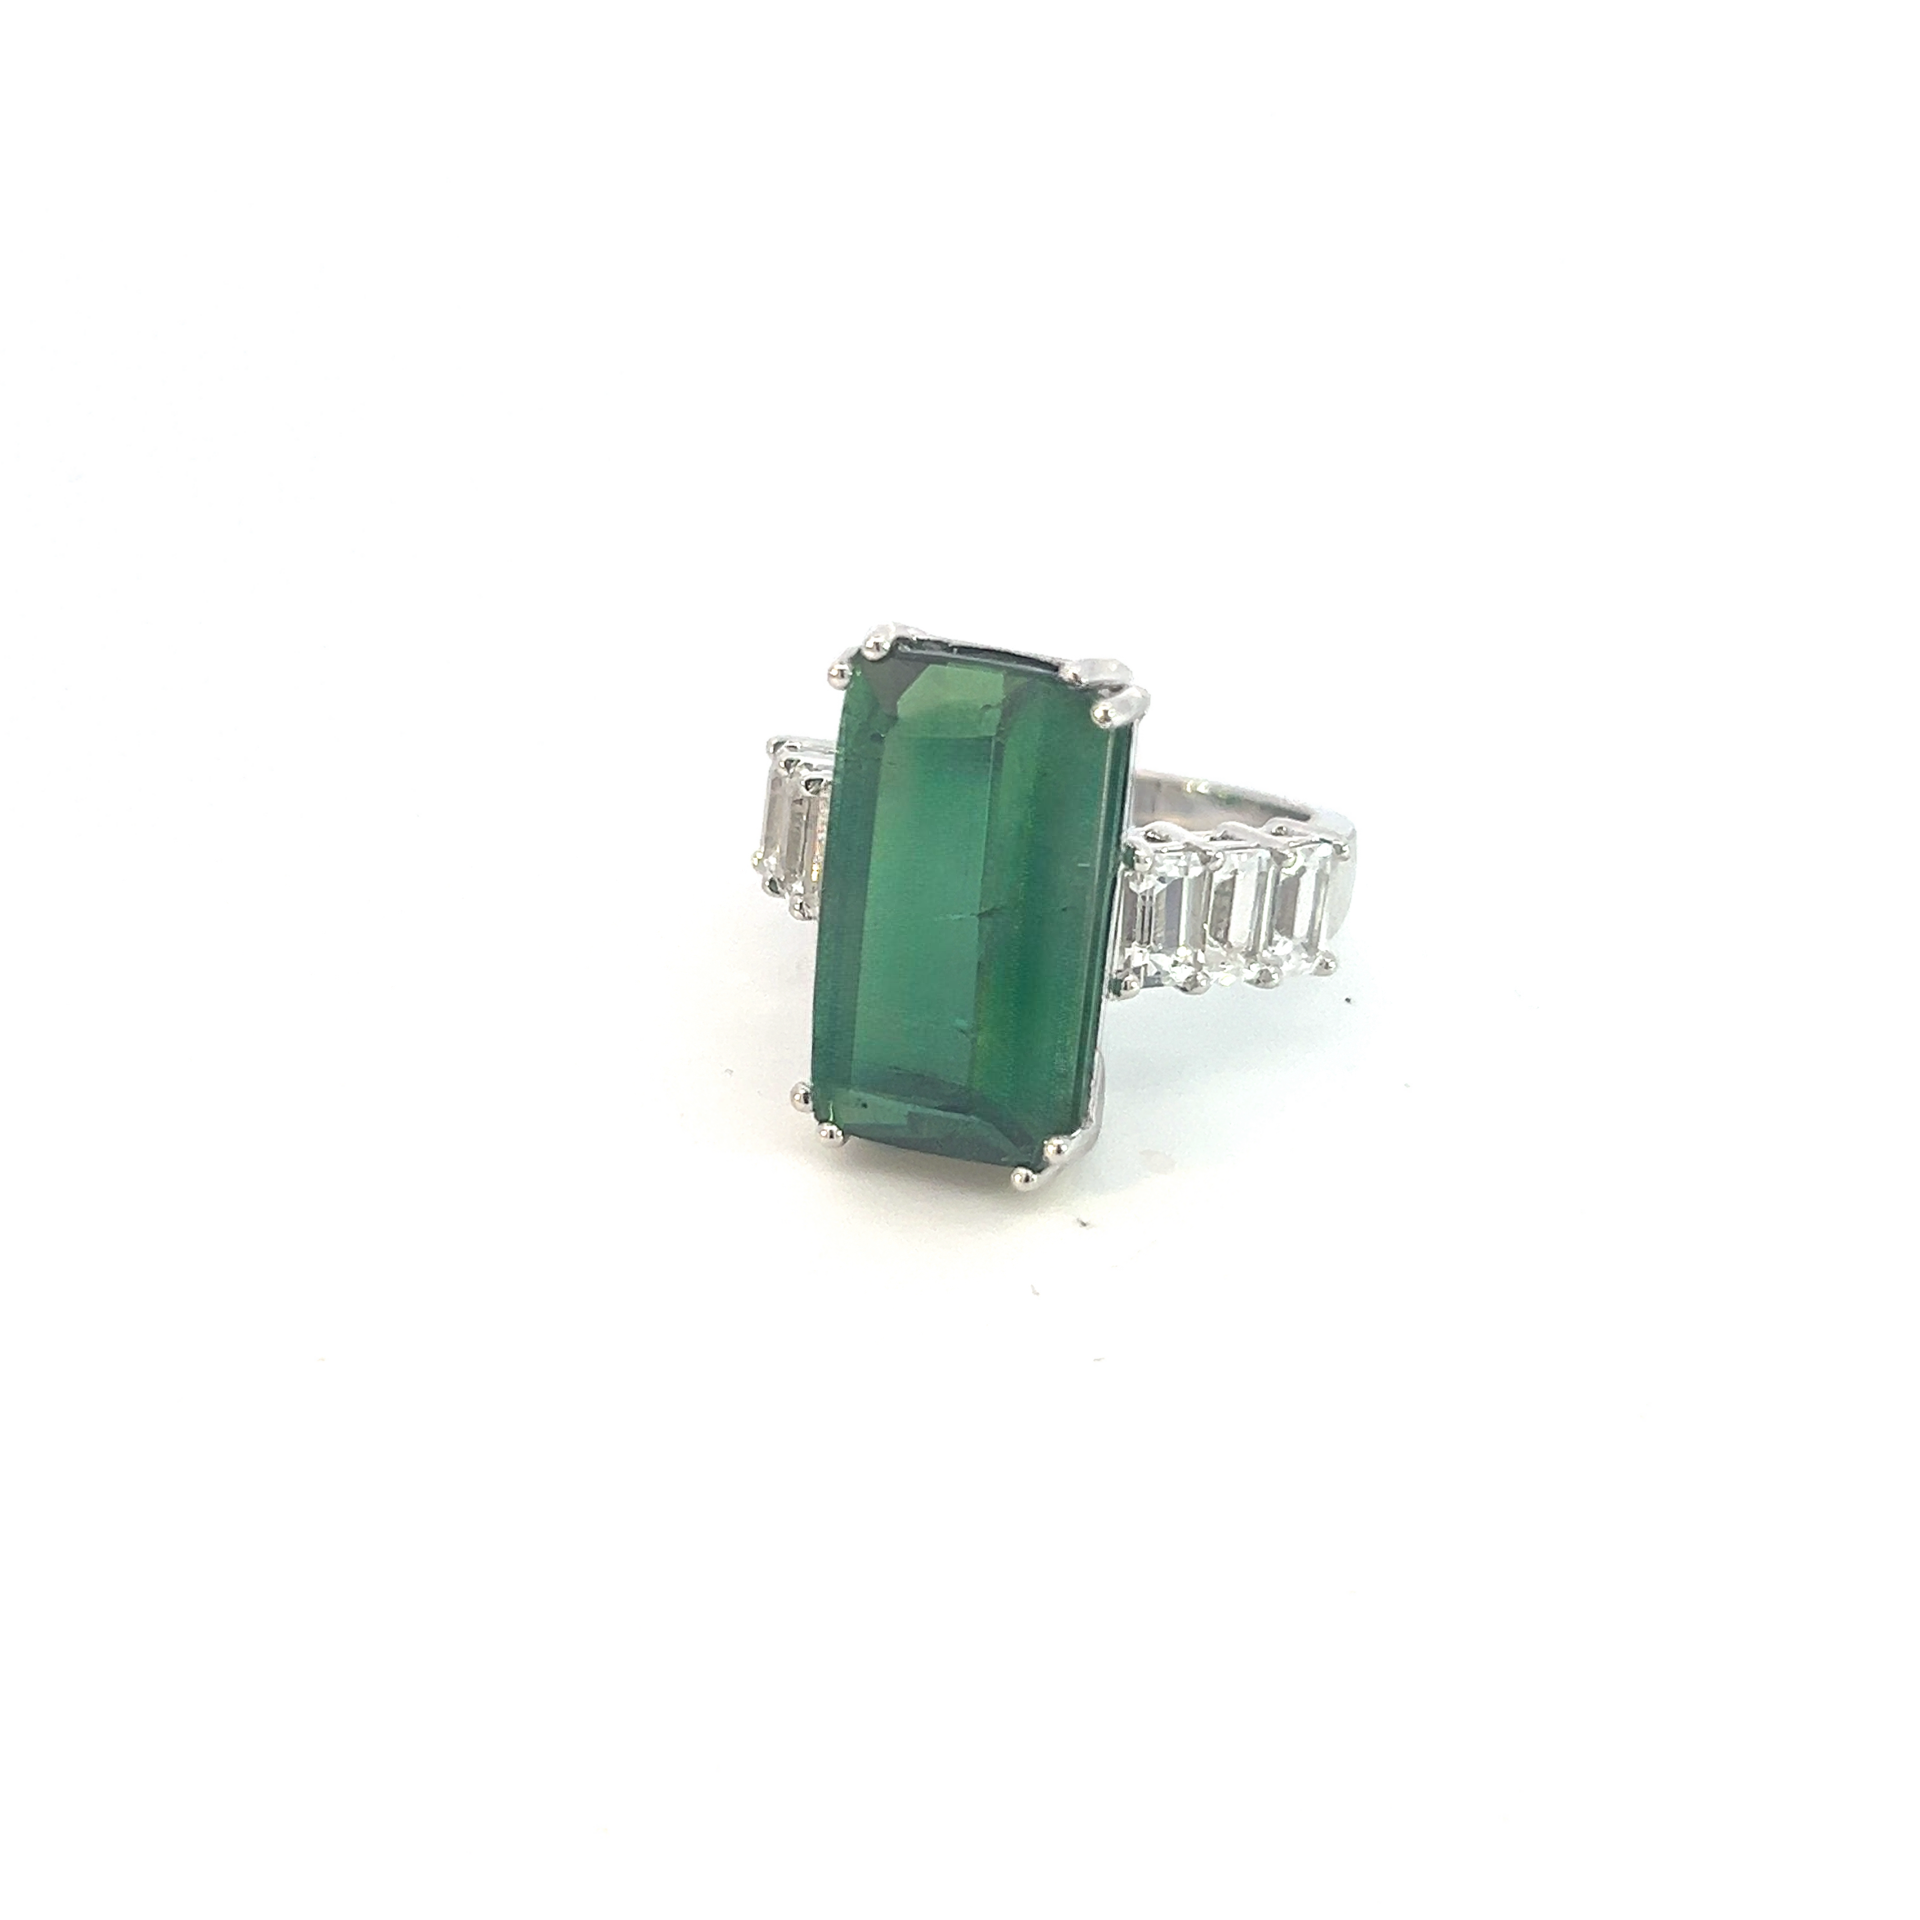 Natural Tourmaline Sapphire Ring 7 14k WG 12.17 TCW Certified $9,750 311033 - Certified Fine Jewelry